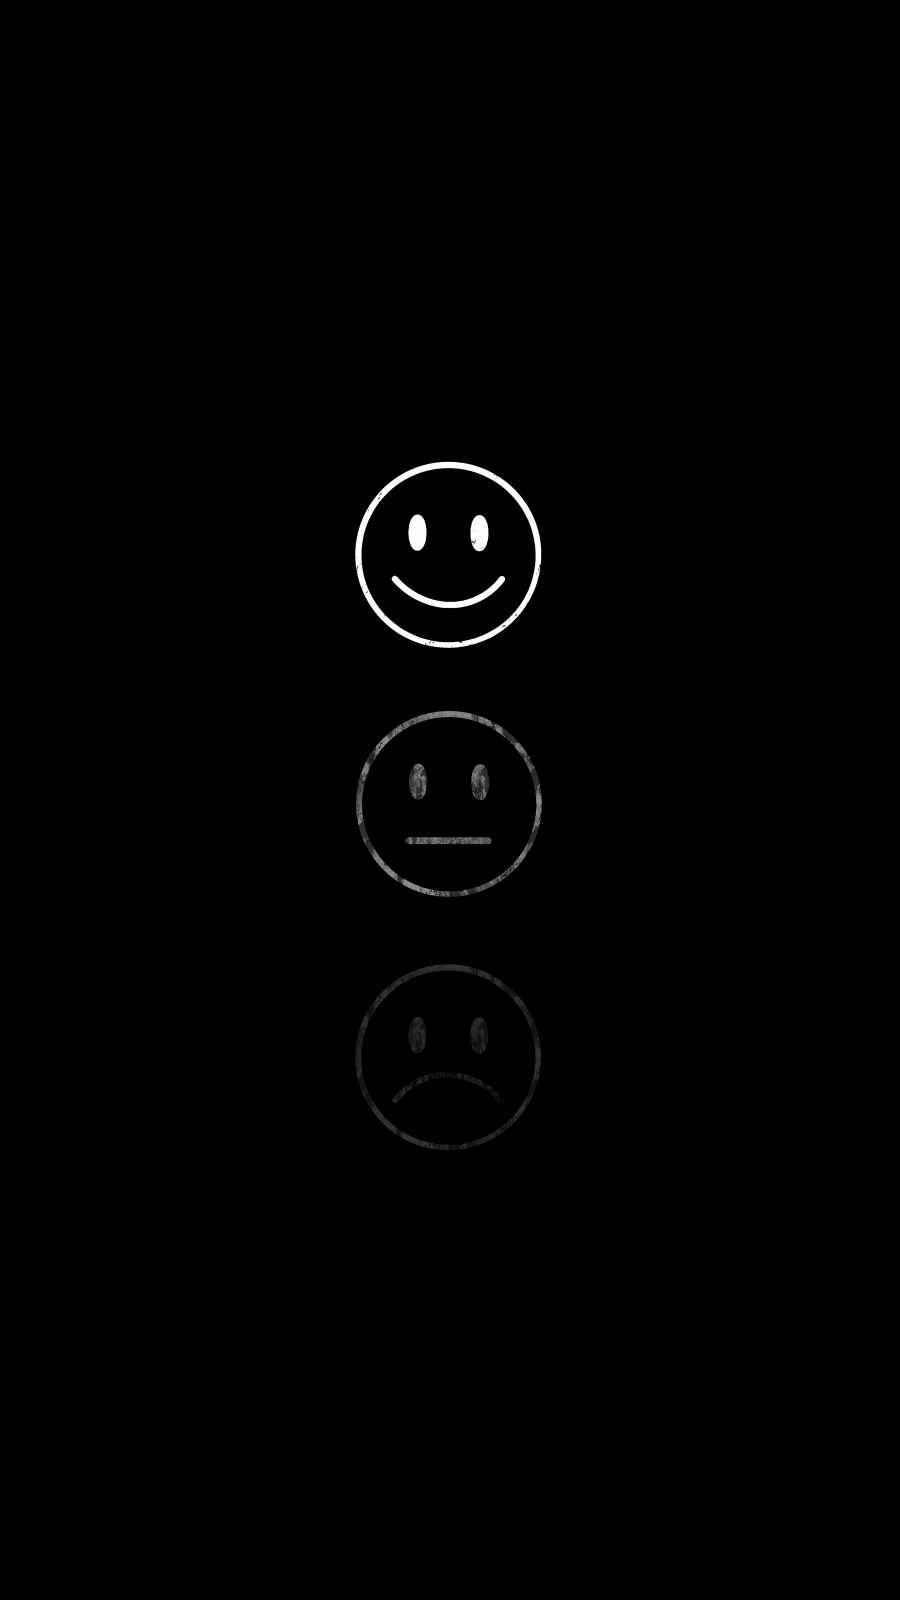 Download Sad Emojis Iphone Wallpaper | Wallpapers.com